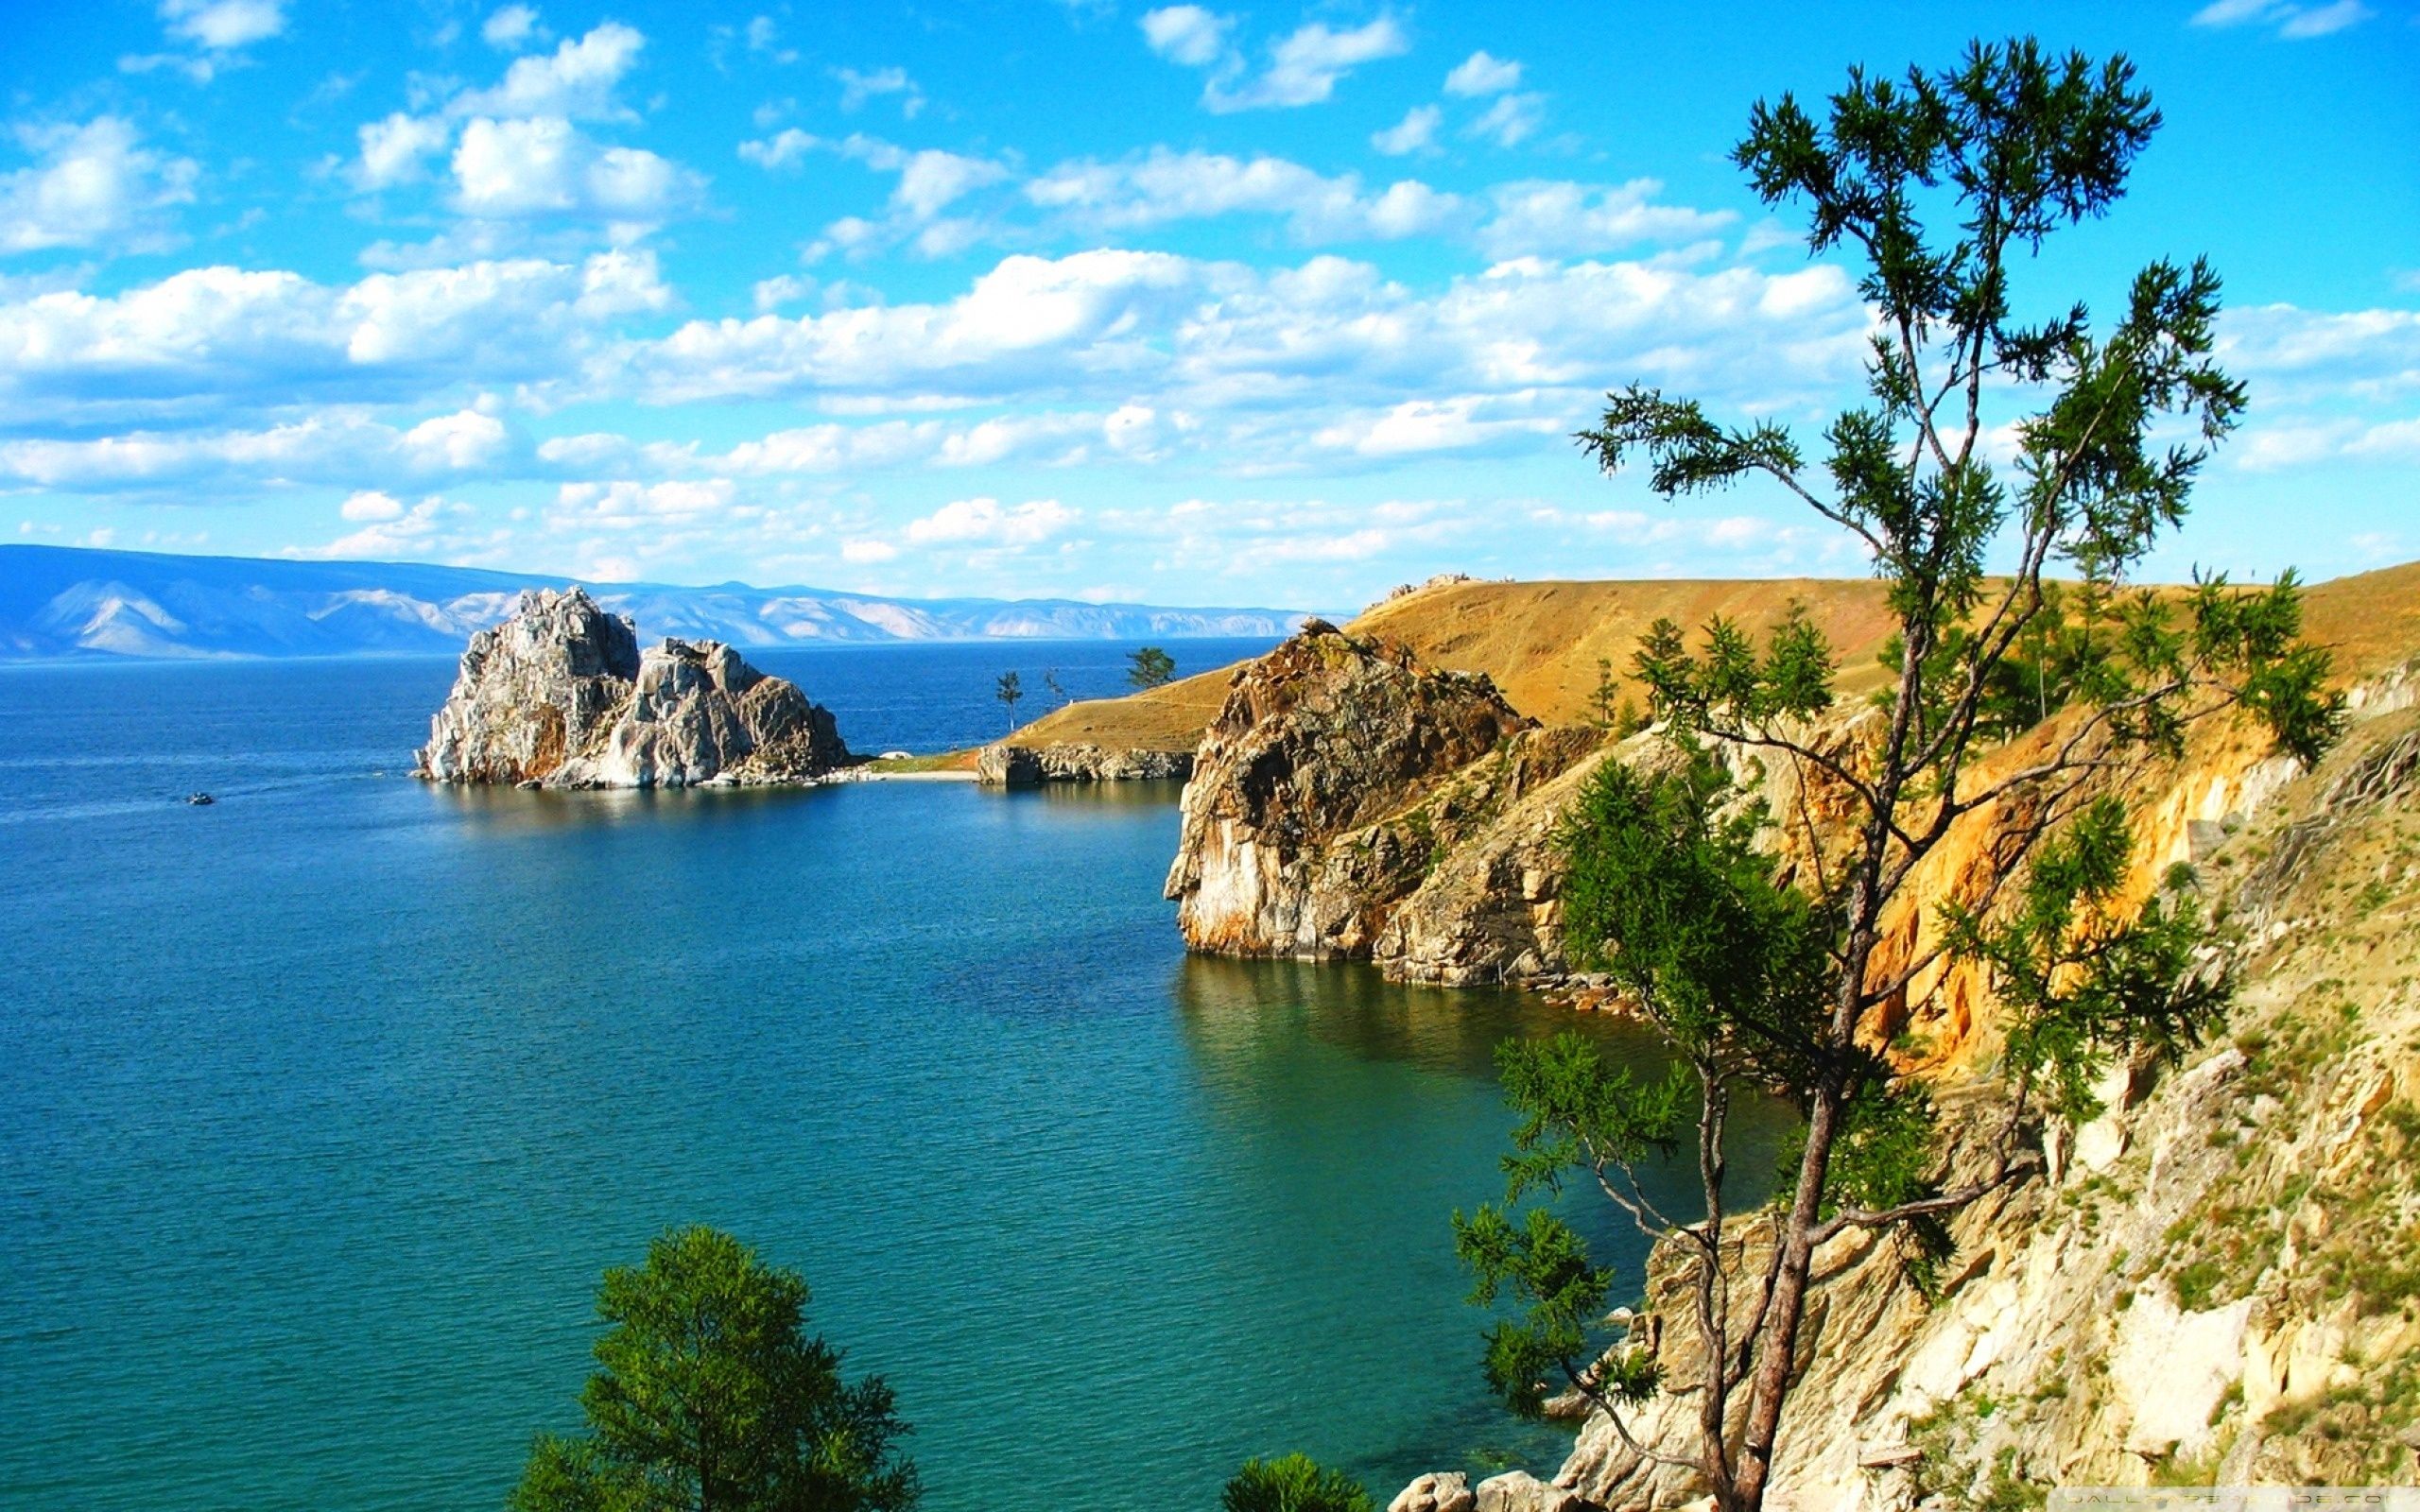 Lake Baikal, Siberia Ultra HD Desktop Backgrounds Wallpapers for